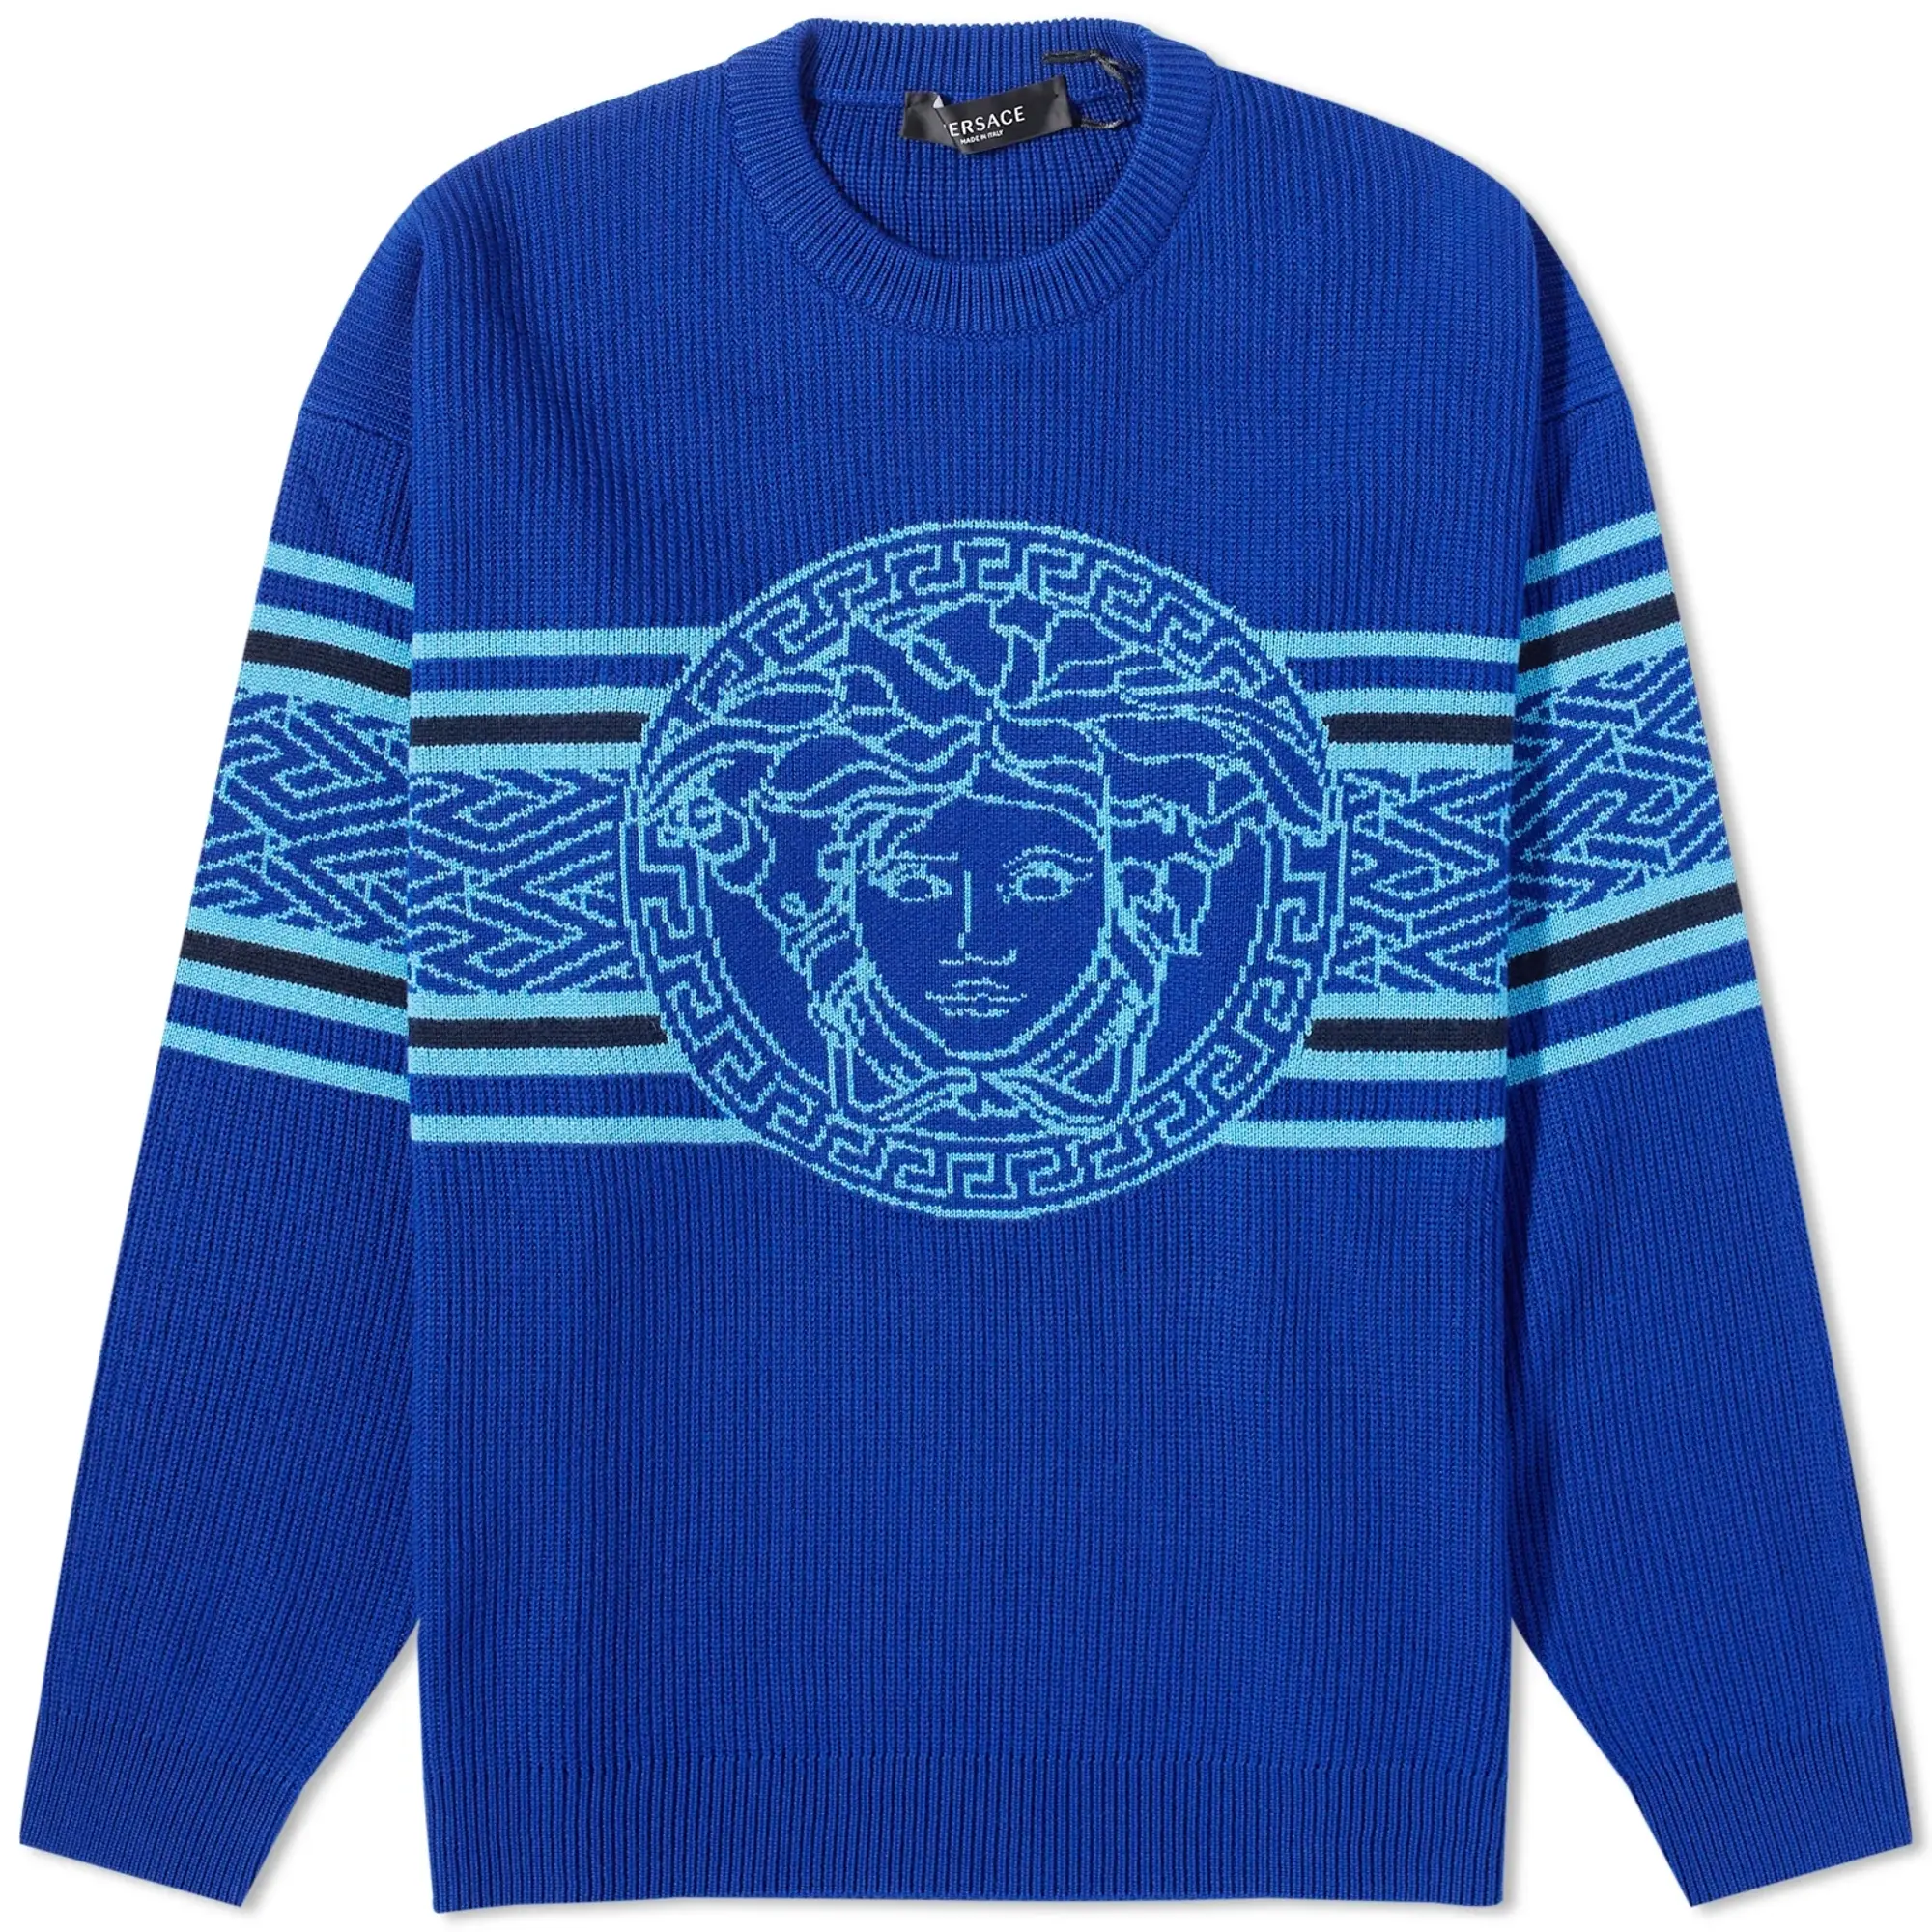 Versace Men's Medusa Crew Knit Bright Blue | 1007981-1A05695-1VA80 ...